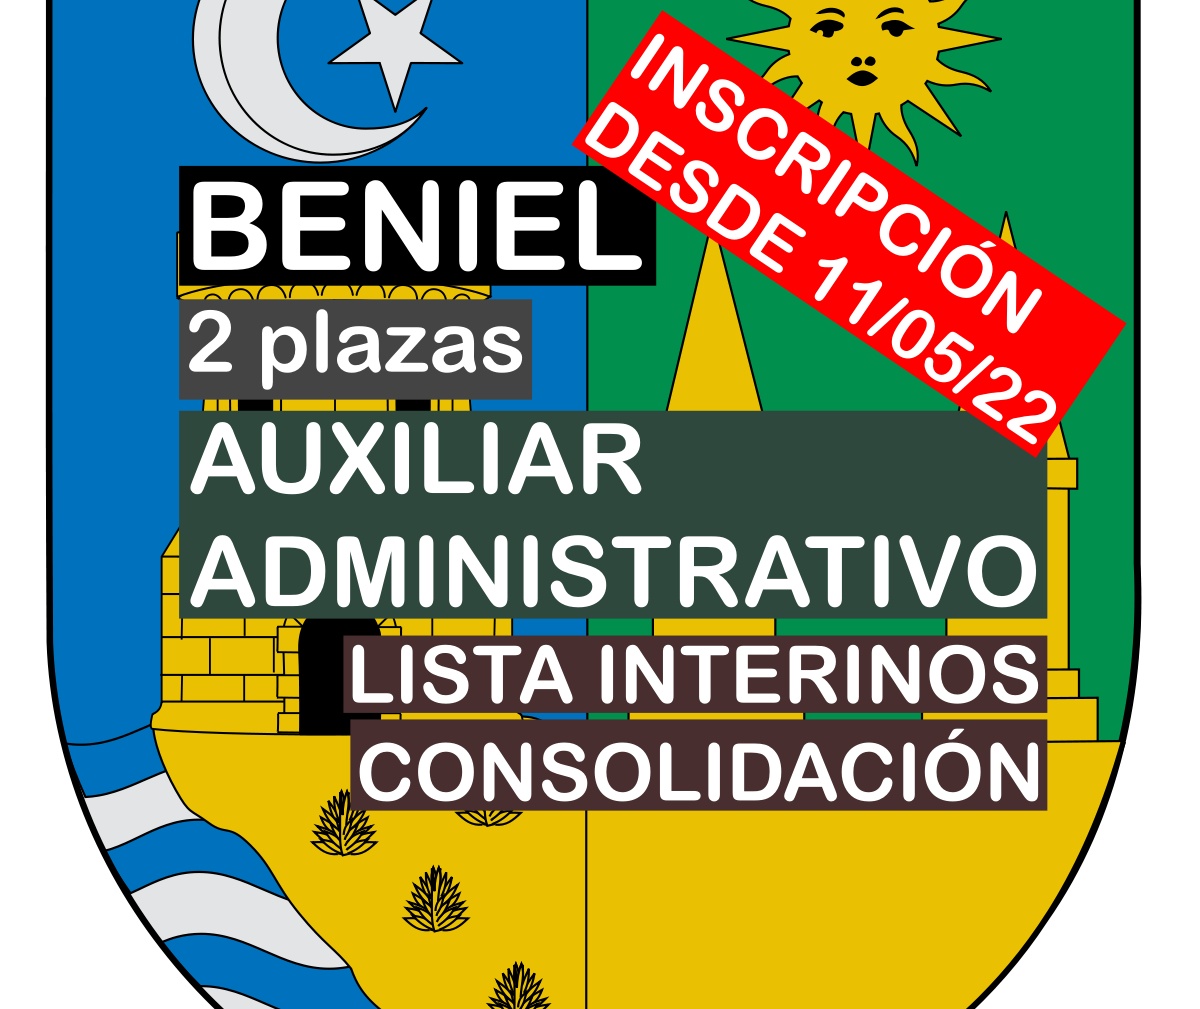 2 plazas Auxiliar Administrativo en Beniel